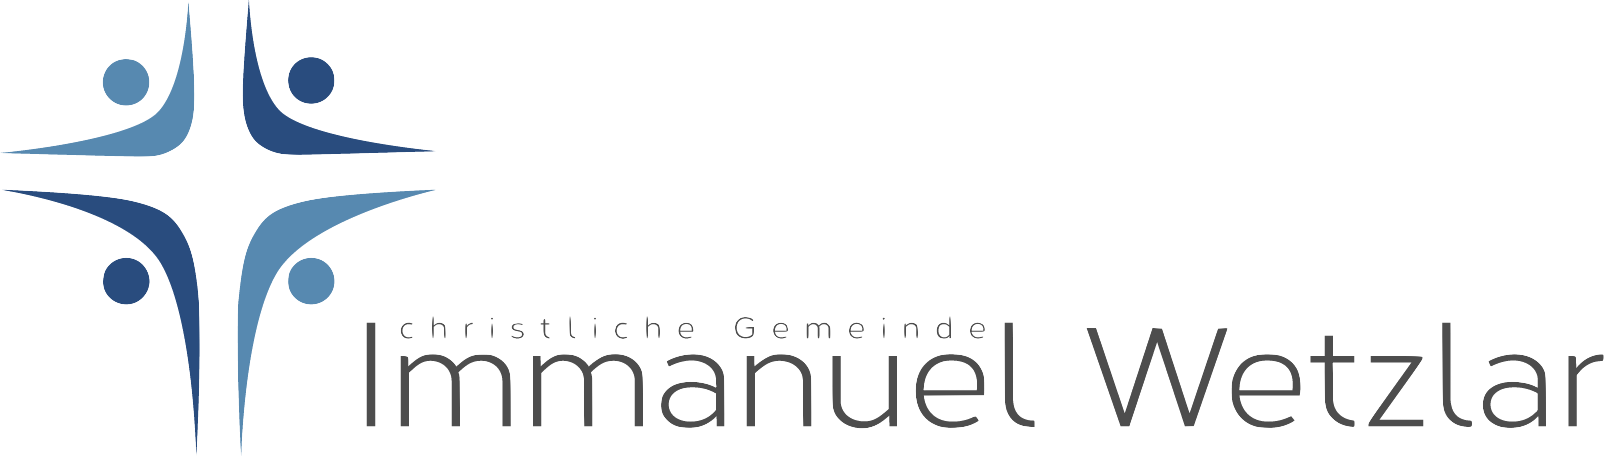 immanuel-wetzlar-logo-630eba41.png